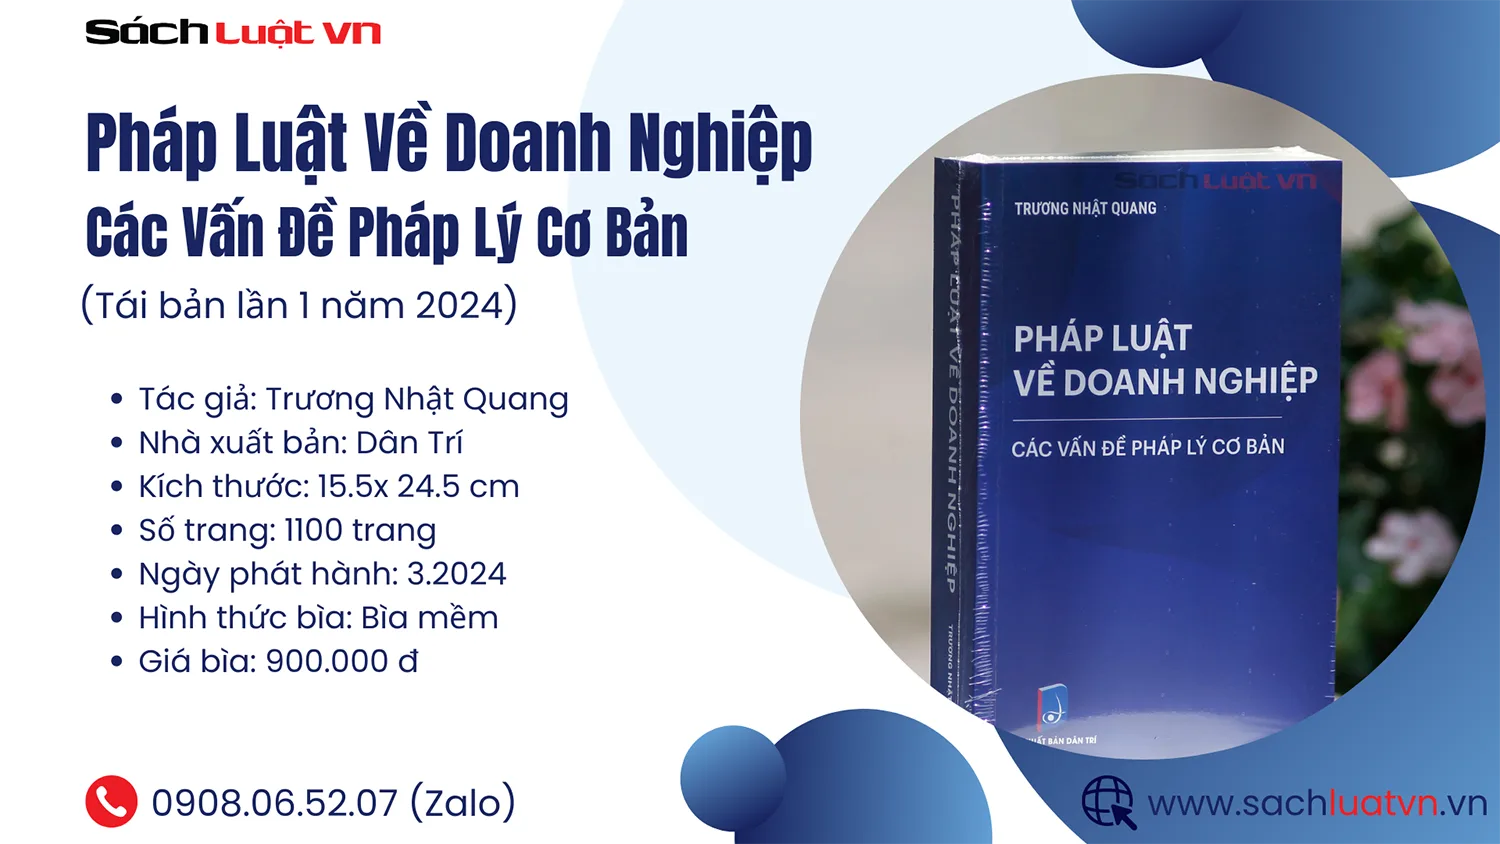 Phap Luat Ve Doanh Nghiep 3 copy